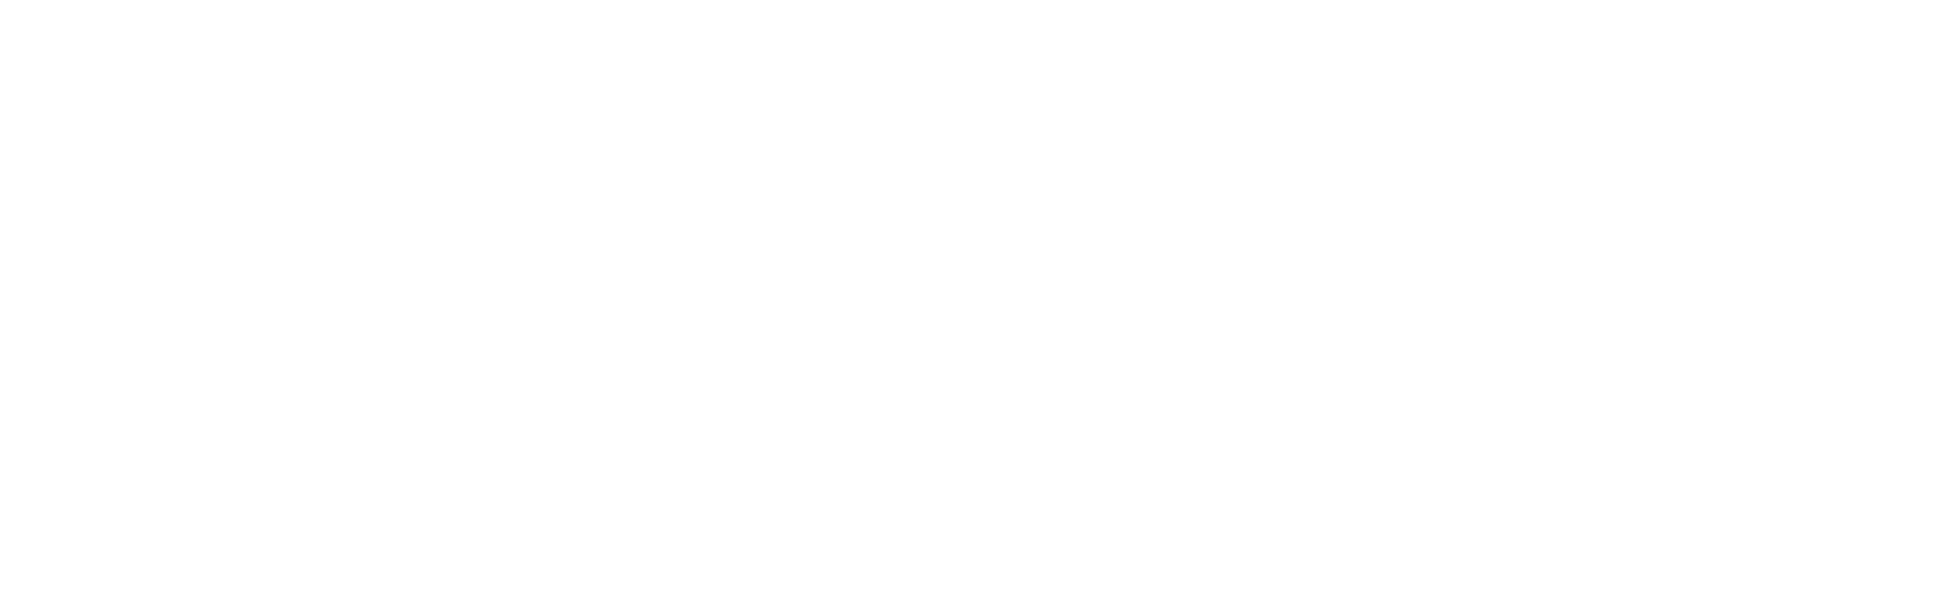 Sanctuary in Chichester logo